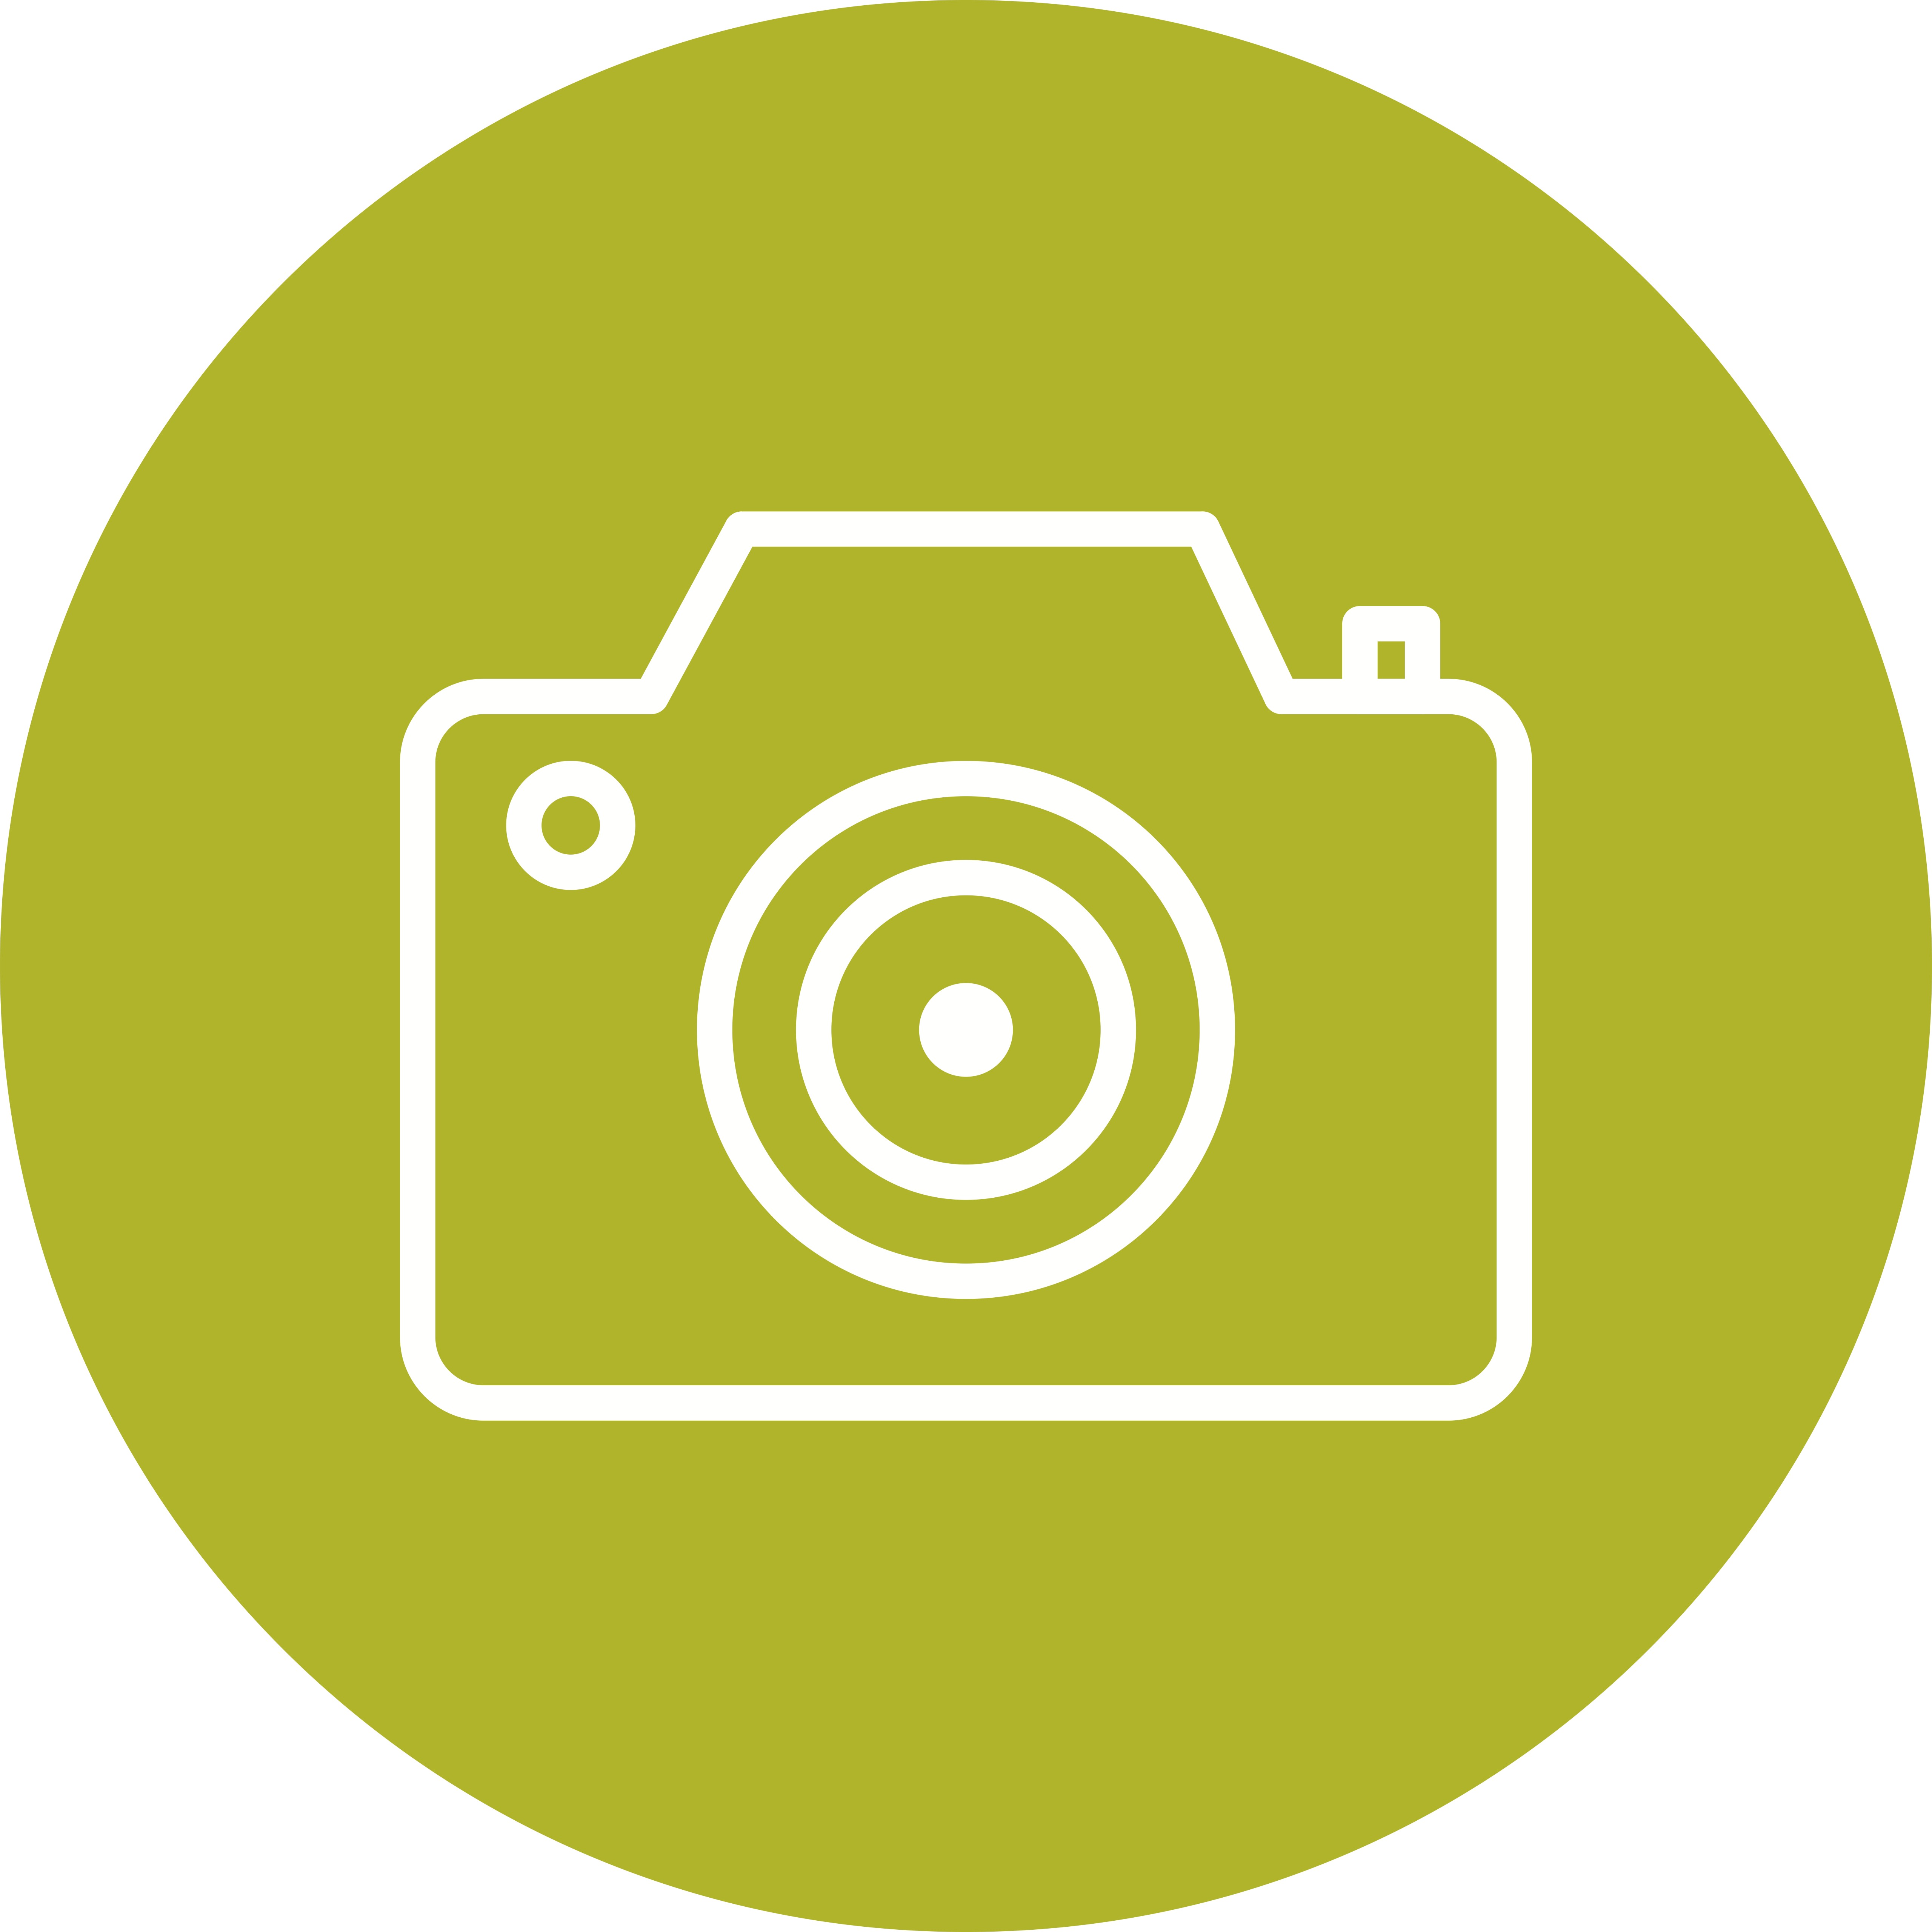 Download Camera Icon Vector Illustration - Download Free Vectors, Clipart Graphics & Vector Art